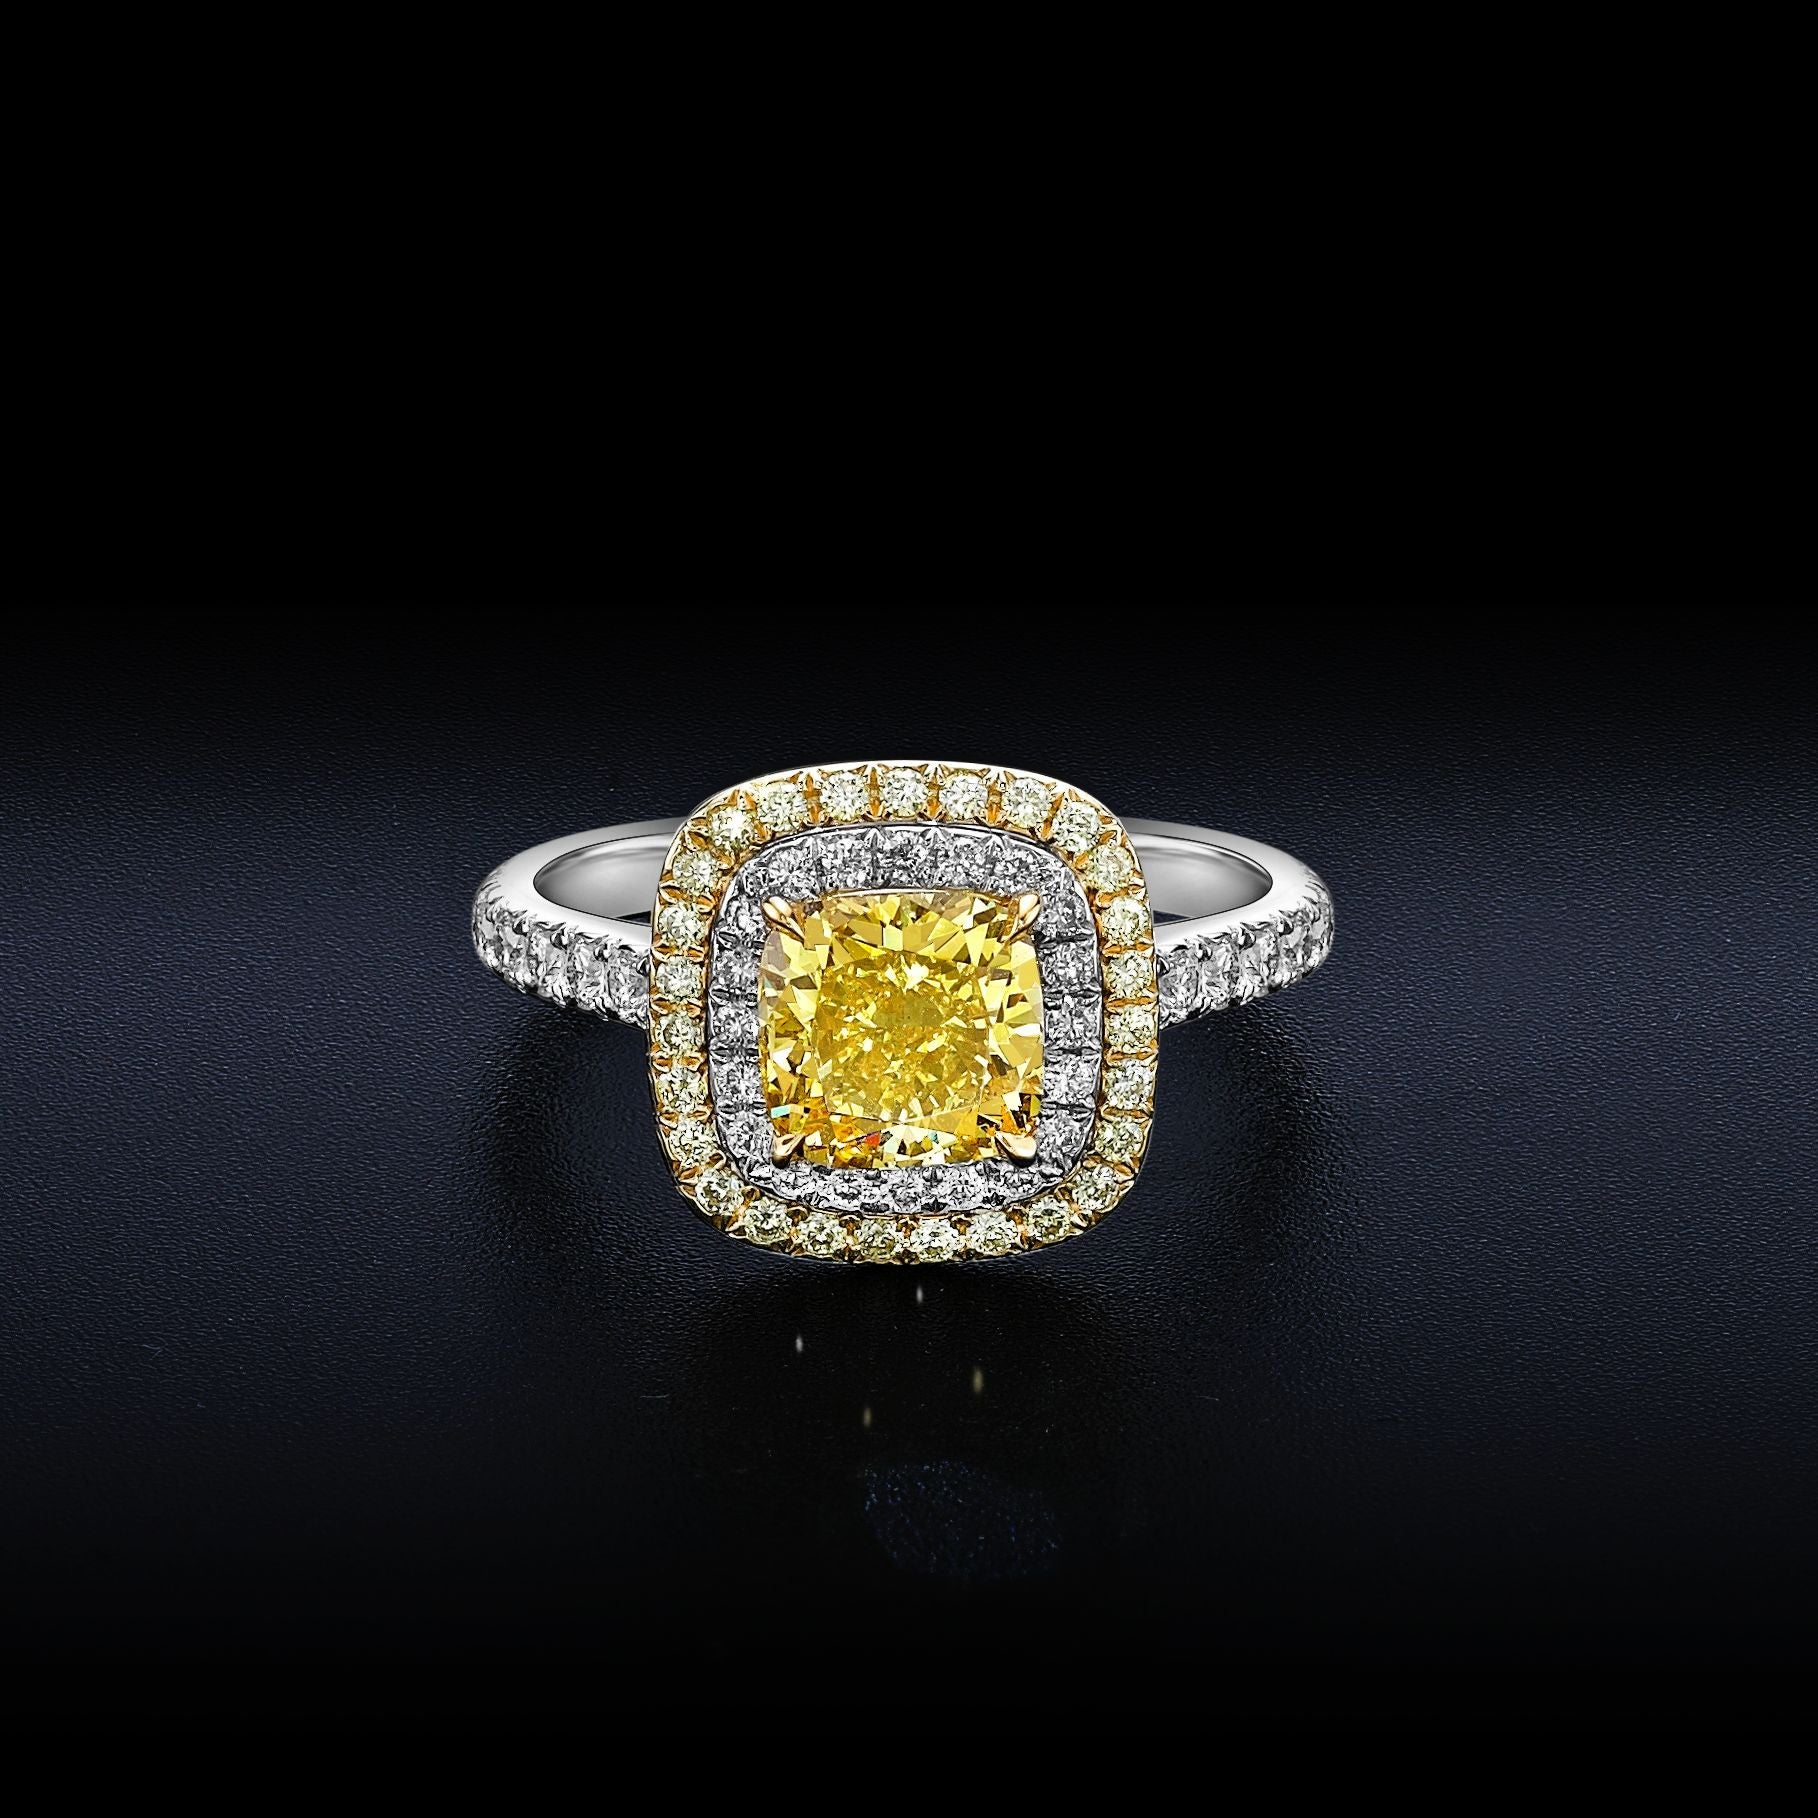 Vivid Yellow Diamond Halo Ring - 2.08ct TW